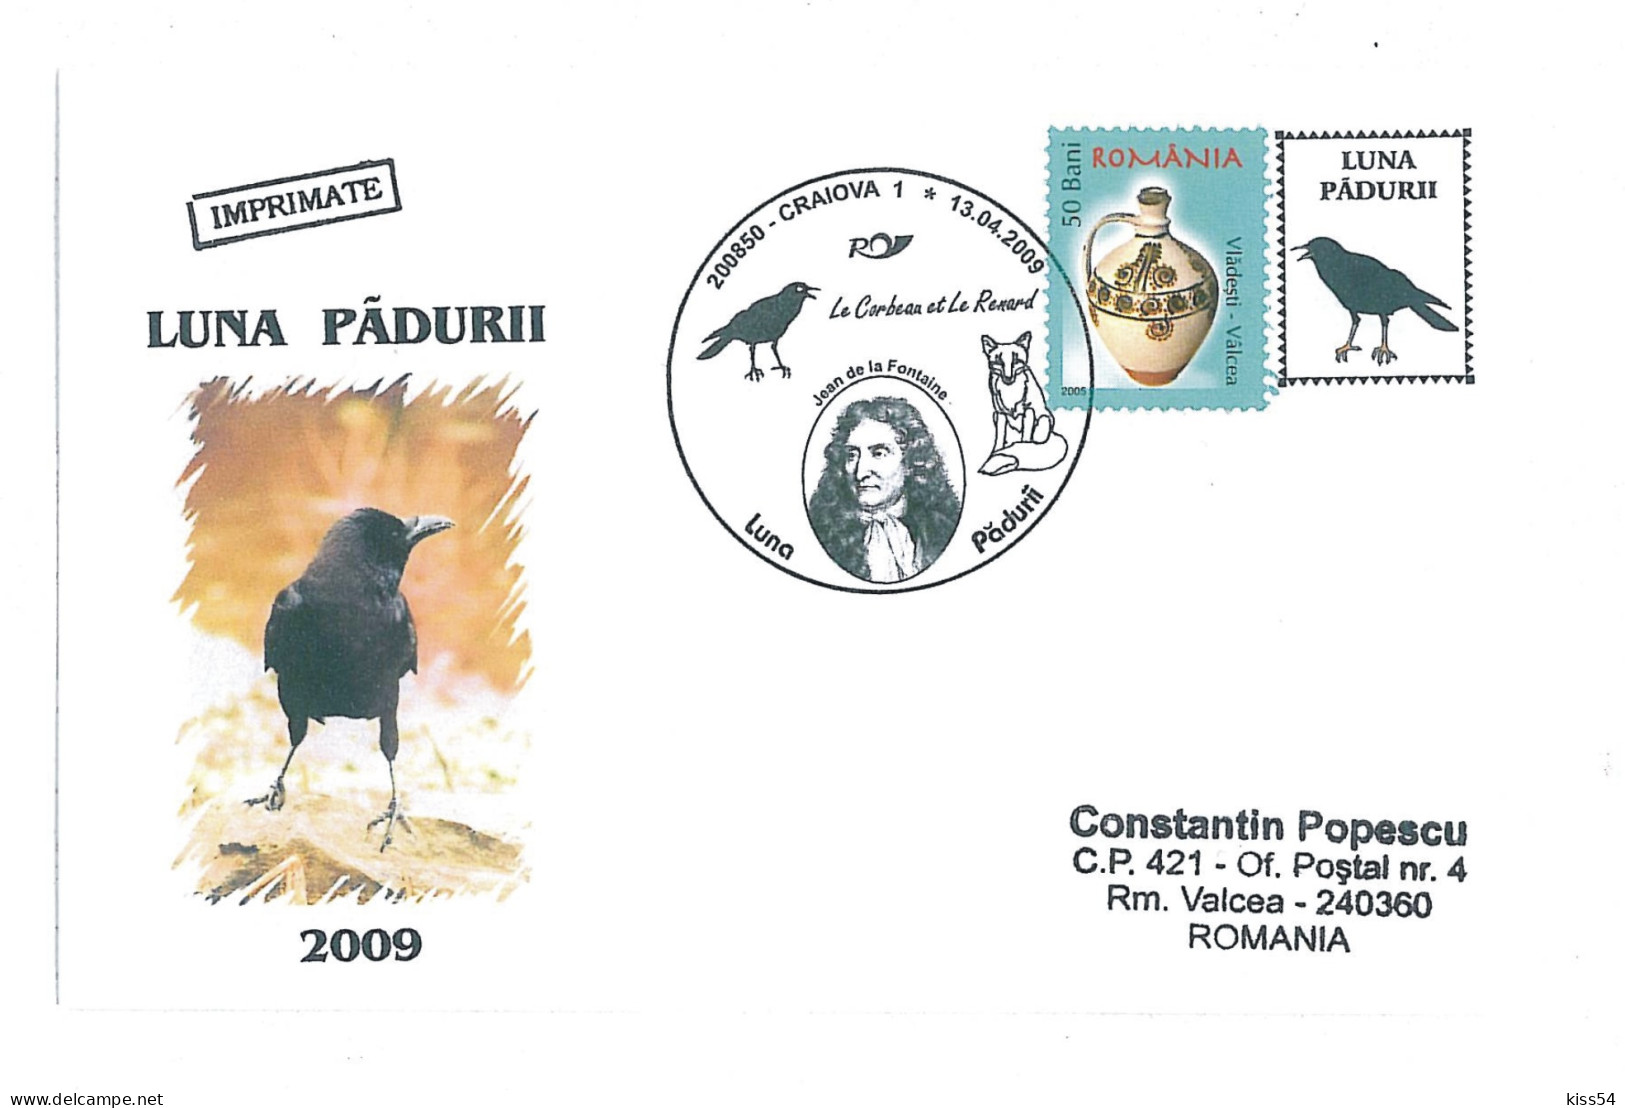 COV 22 - 535 La FONTAINE, RAVEN, Le CORBEAU Et Le Renard, Romania - Cover - Used - 2009 - Maximum Cards & Covers